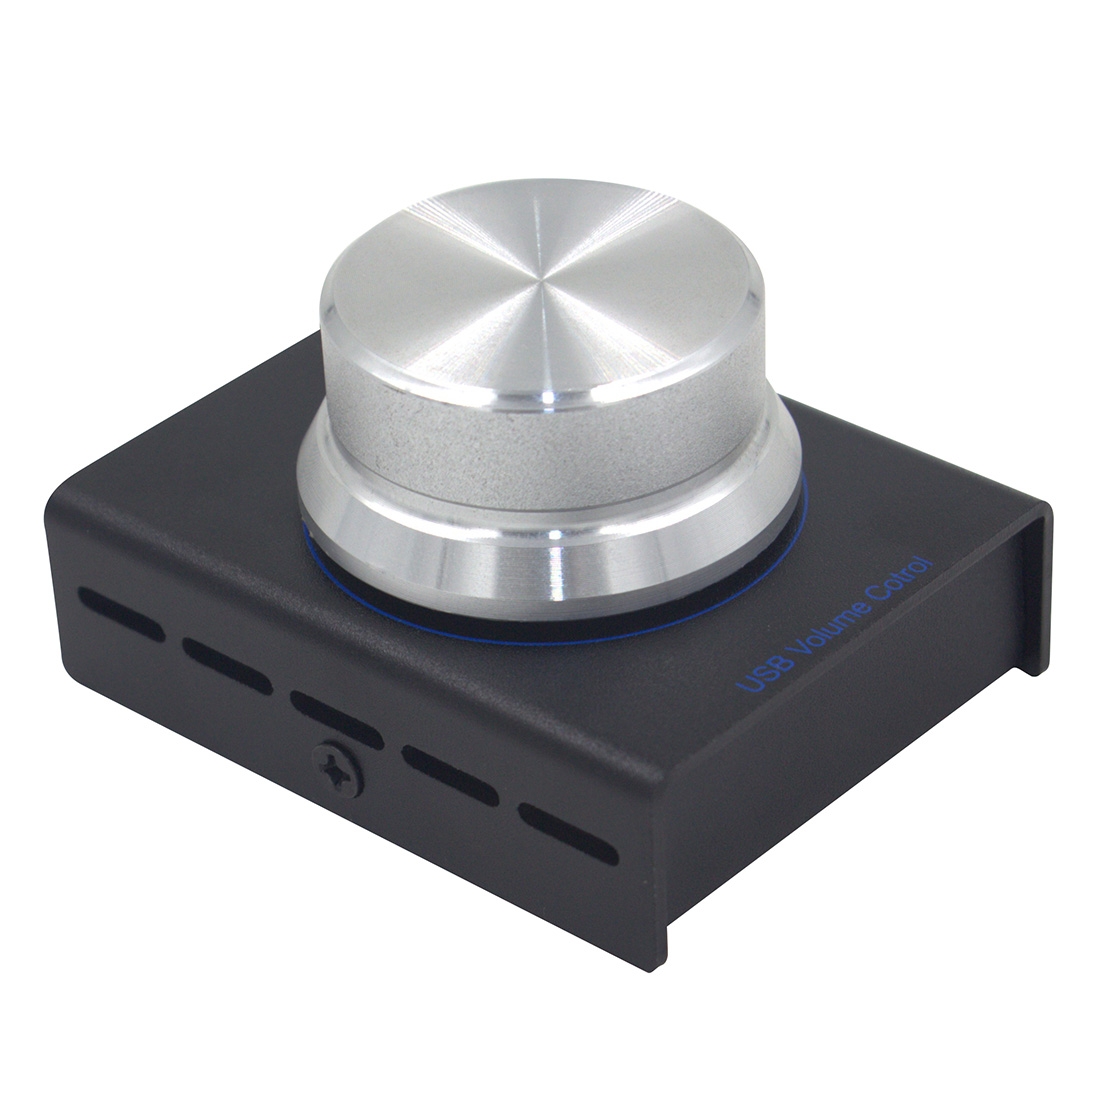 OT-U001 USB Volume Control PC Computer Speaker Audio Volume Controller Knob, Support Win 10 / 8 / 7 / Vista / XP & Mac (Black)